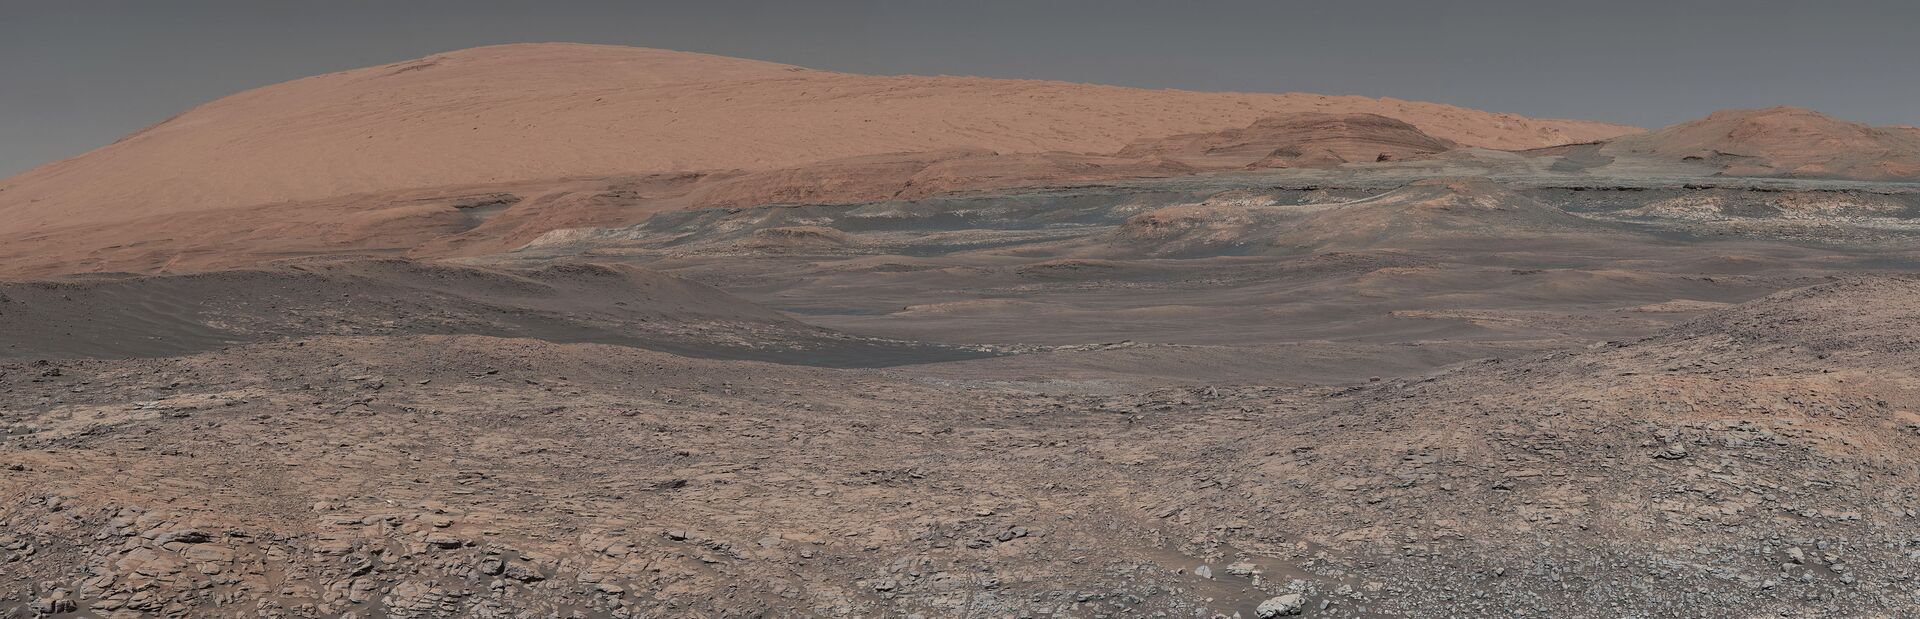 Russian-European Mars Orbiter Detects Hydrogen Chloride in Red Planet's Atmosphere - Sputnik International, 1920, 11.02.2021